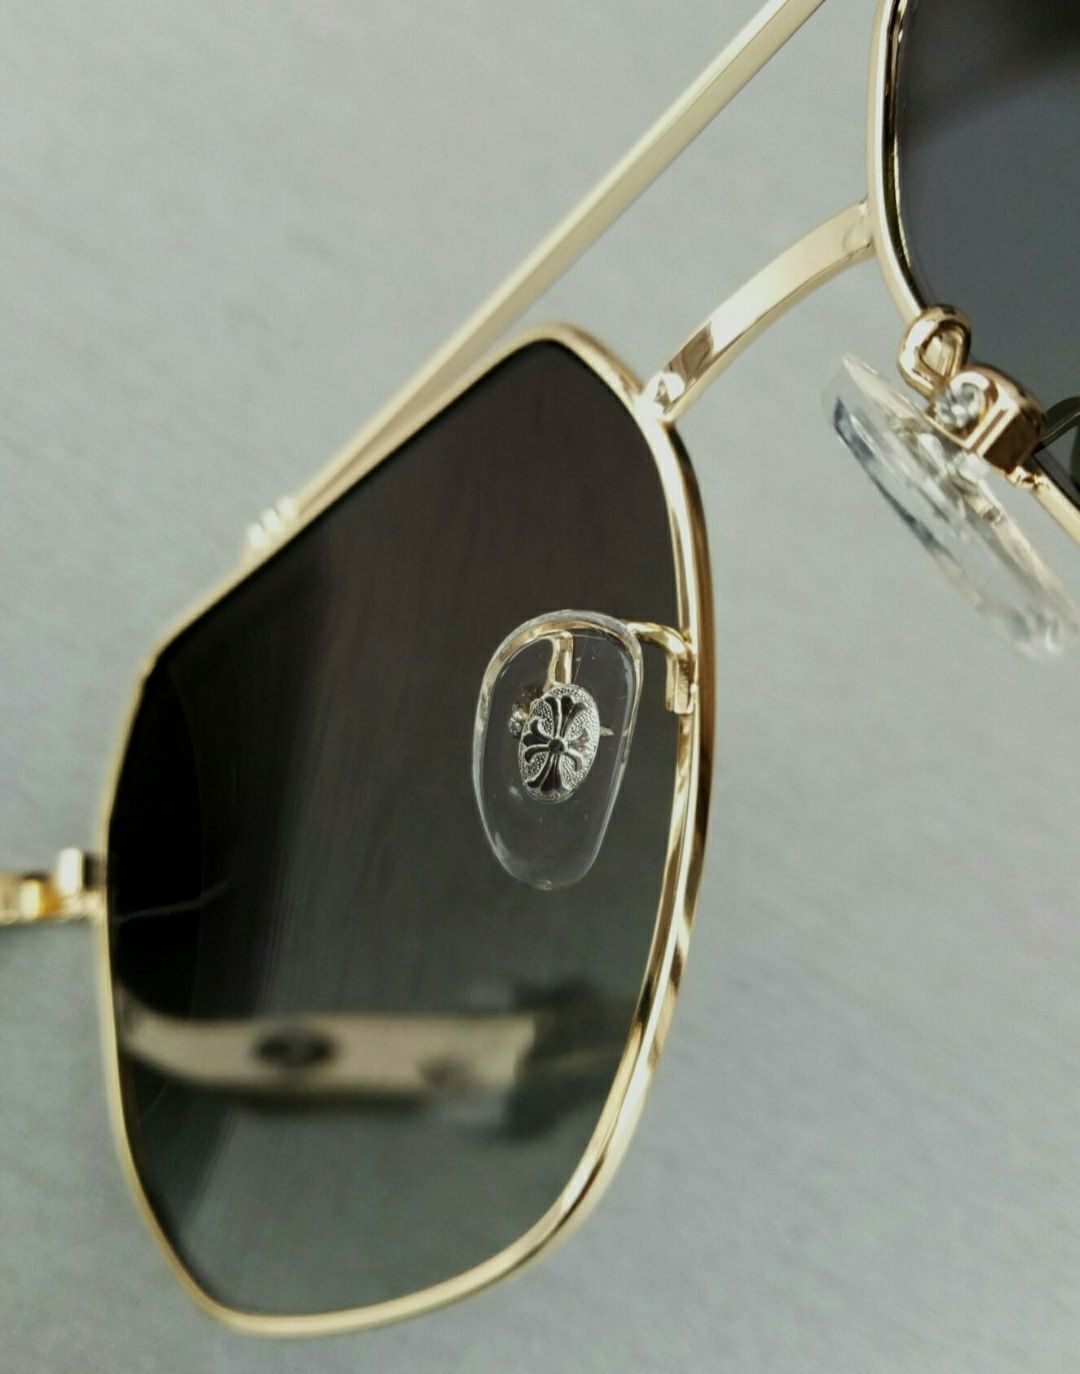 Chrome Hearts очки мужские коричневый градиент в золотист метал оправе